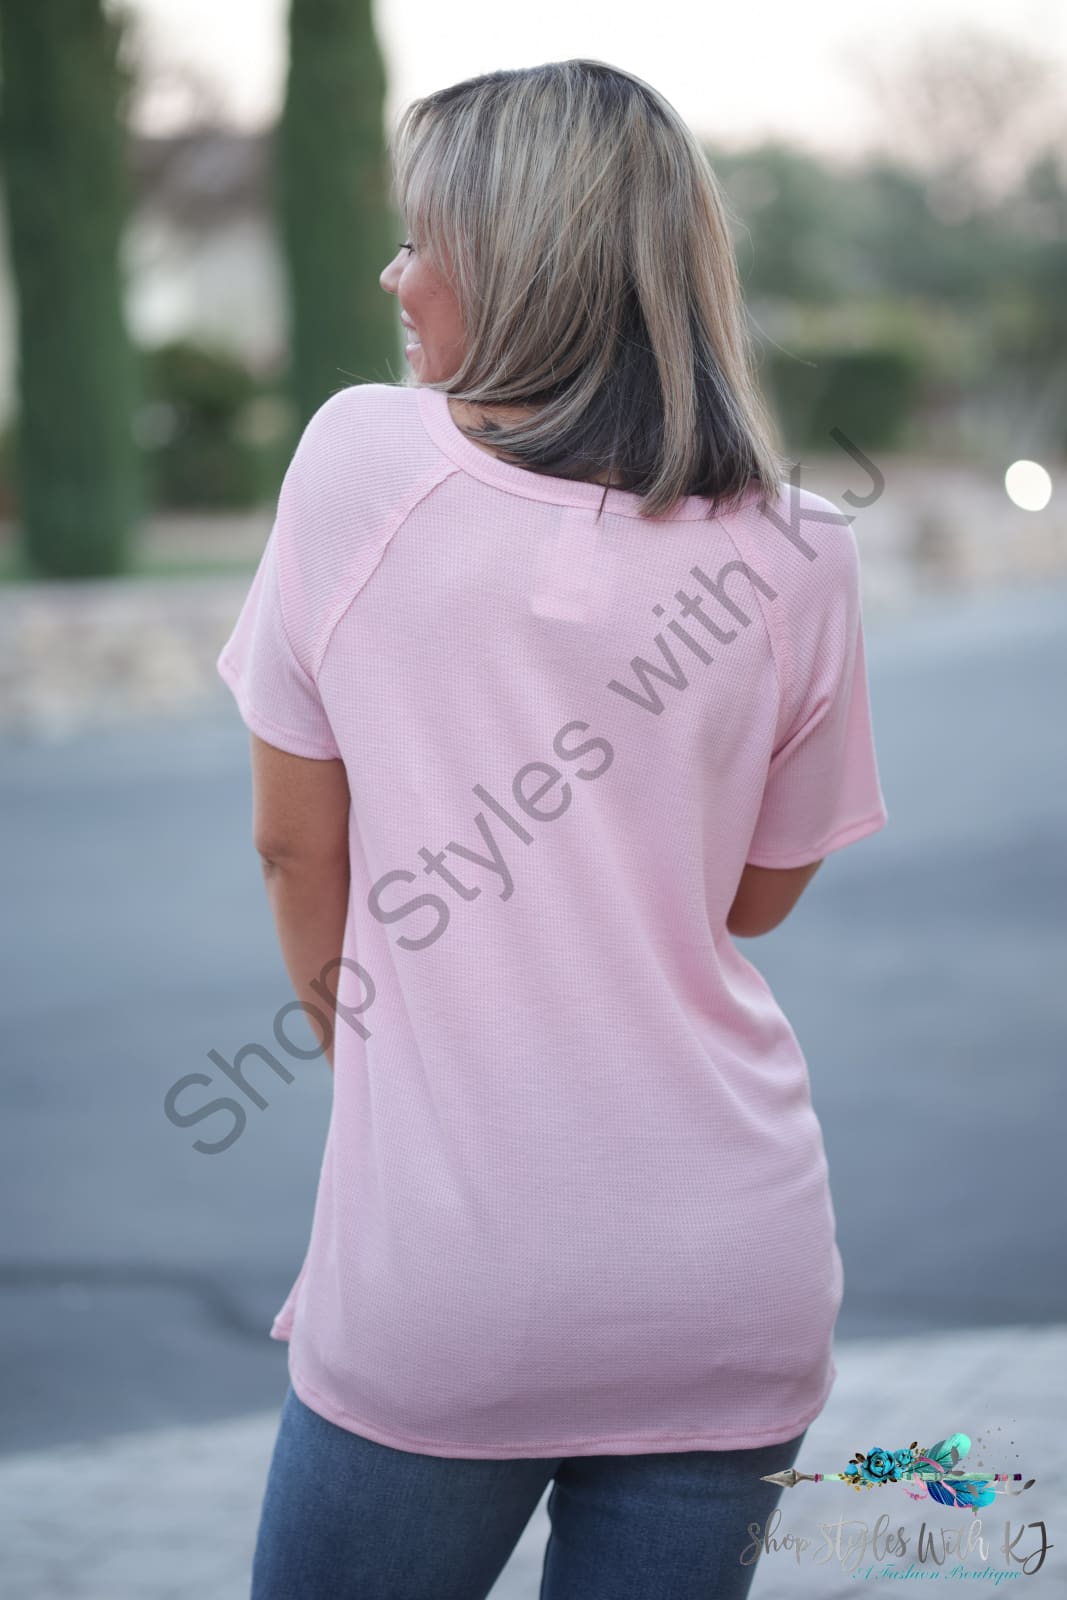 Stitched In Pink Short Sleeve Top Springintospring